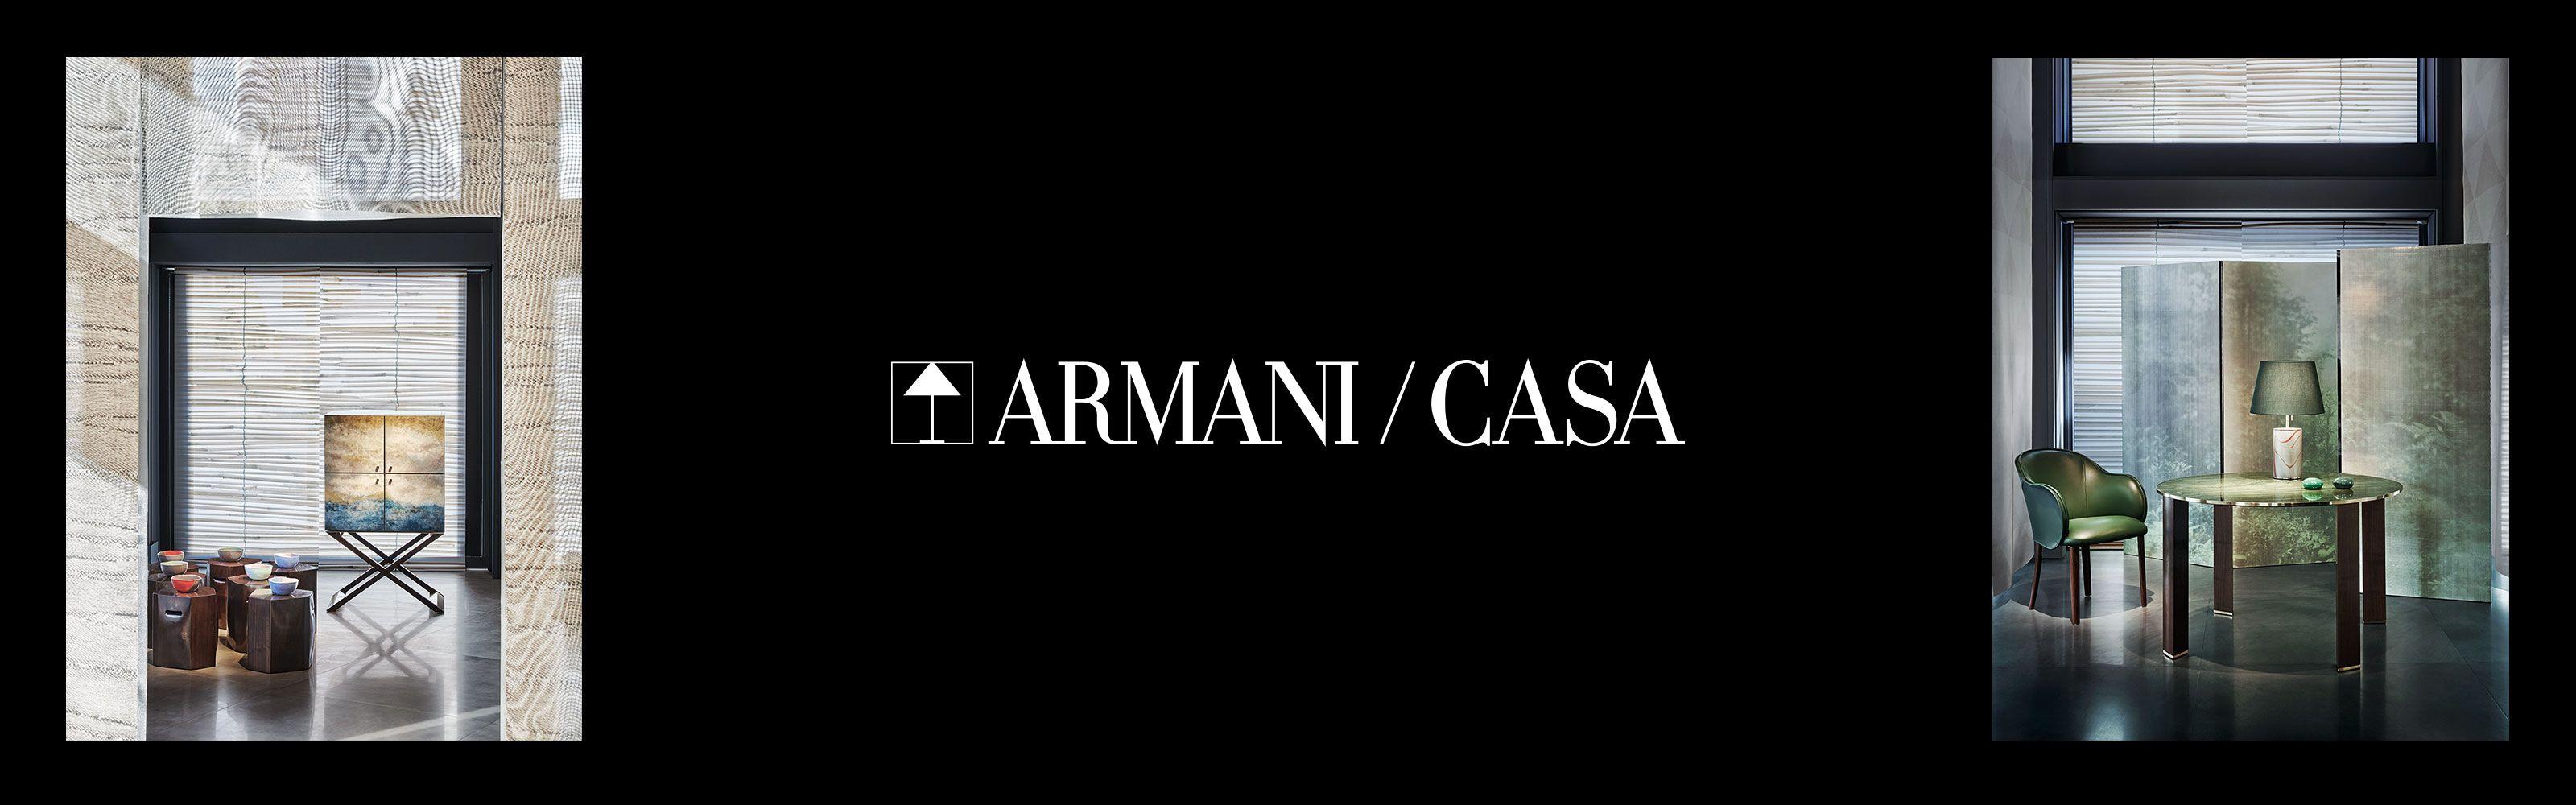 Armani Casa Logo - Armani / Casa - Decoration & Design Building